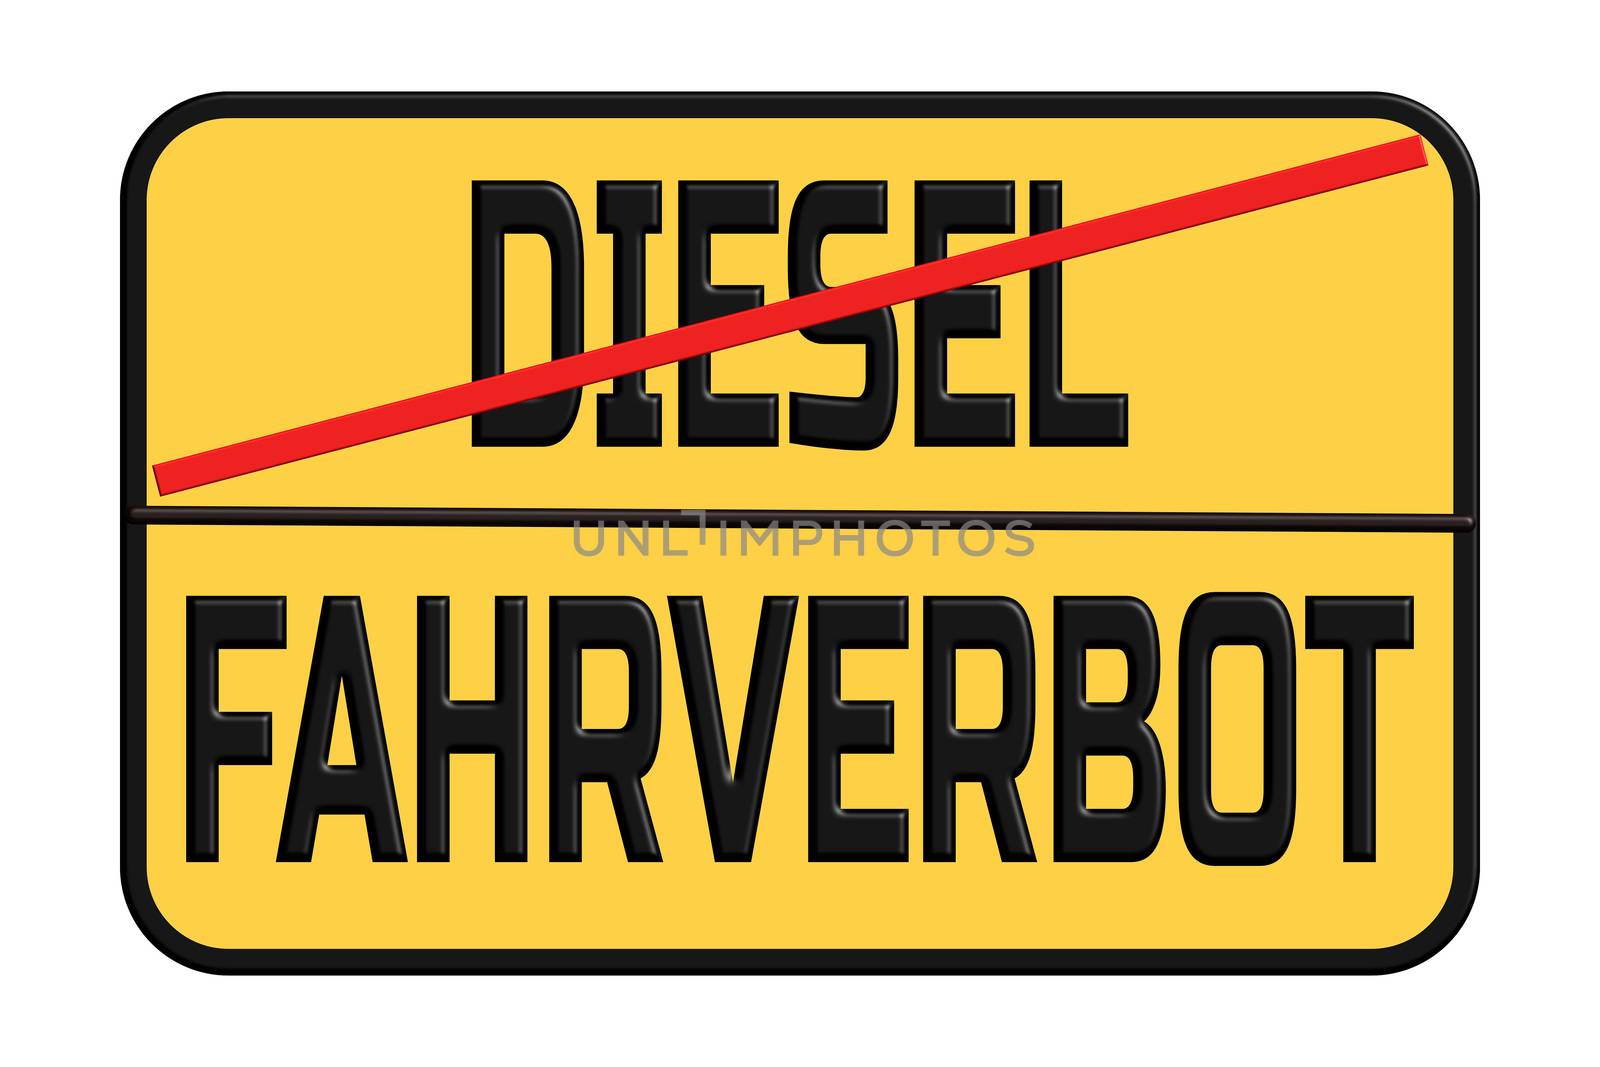 Driving traffic signs for diesel cars in Germany. Diesel Interdiction symbol